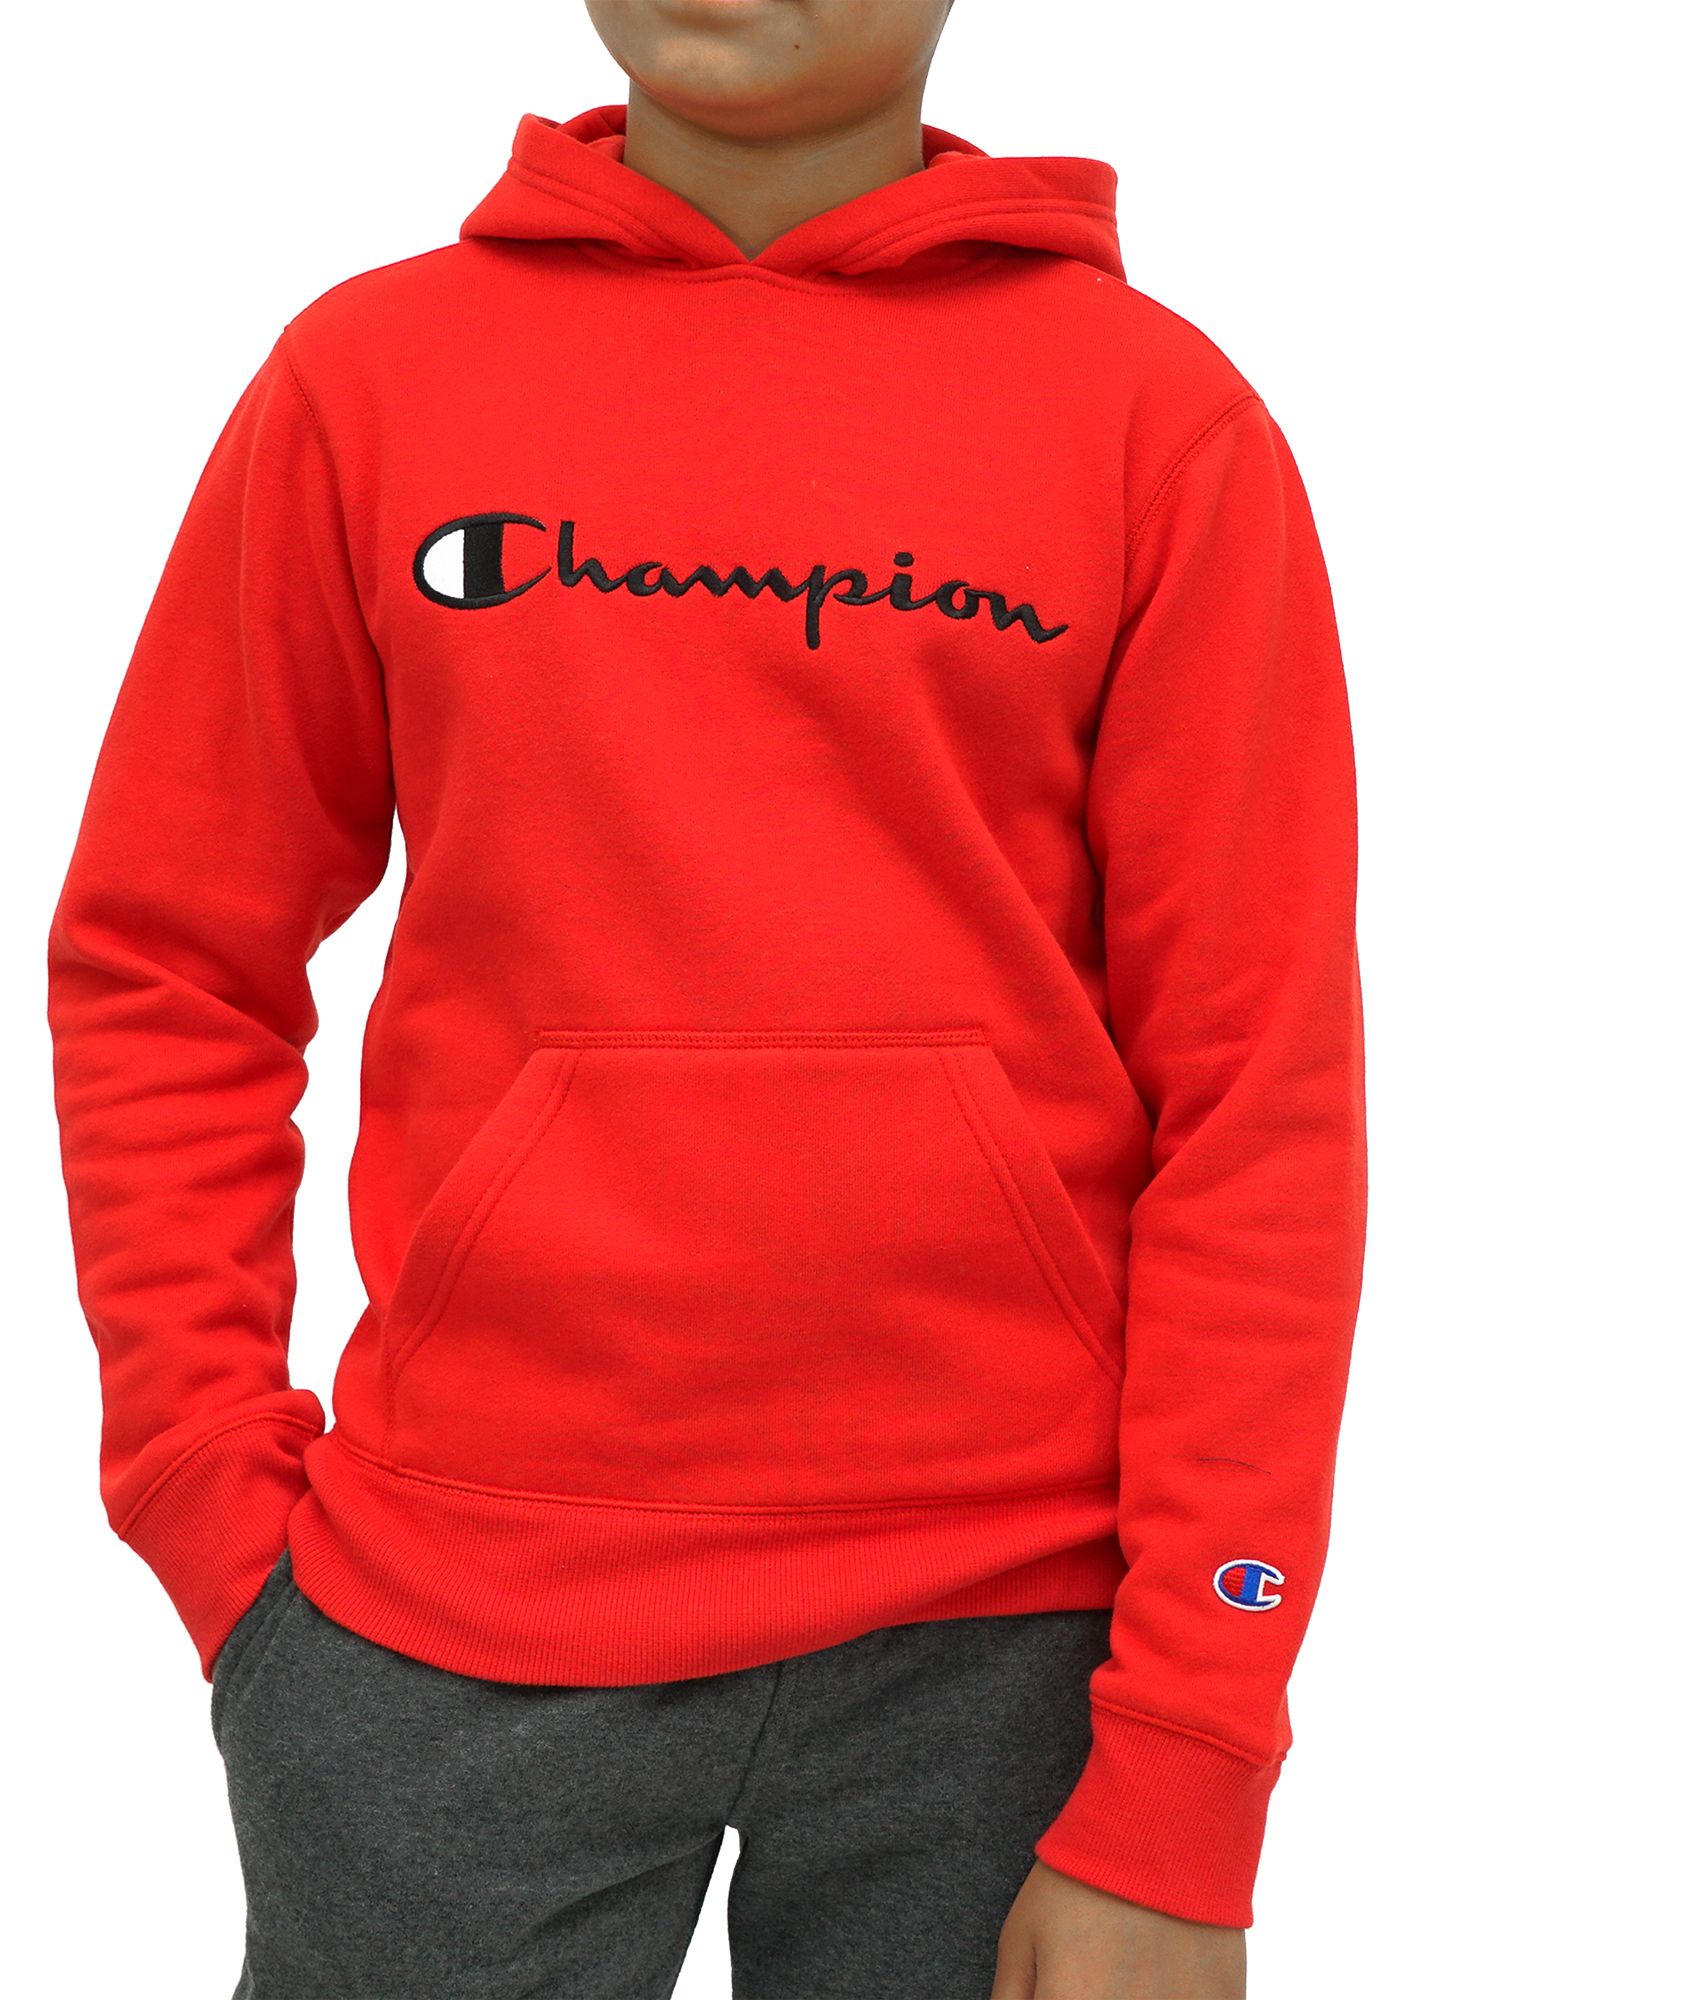 dicks sporting goods champion hoodie